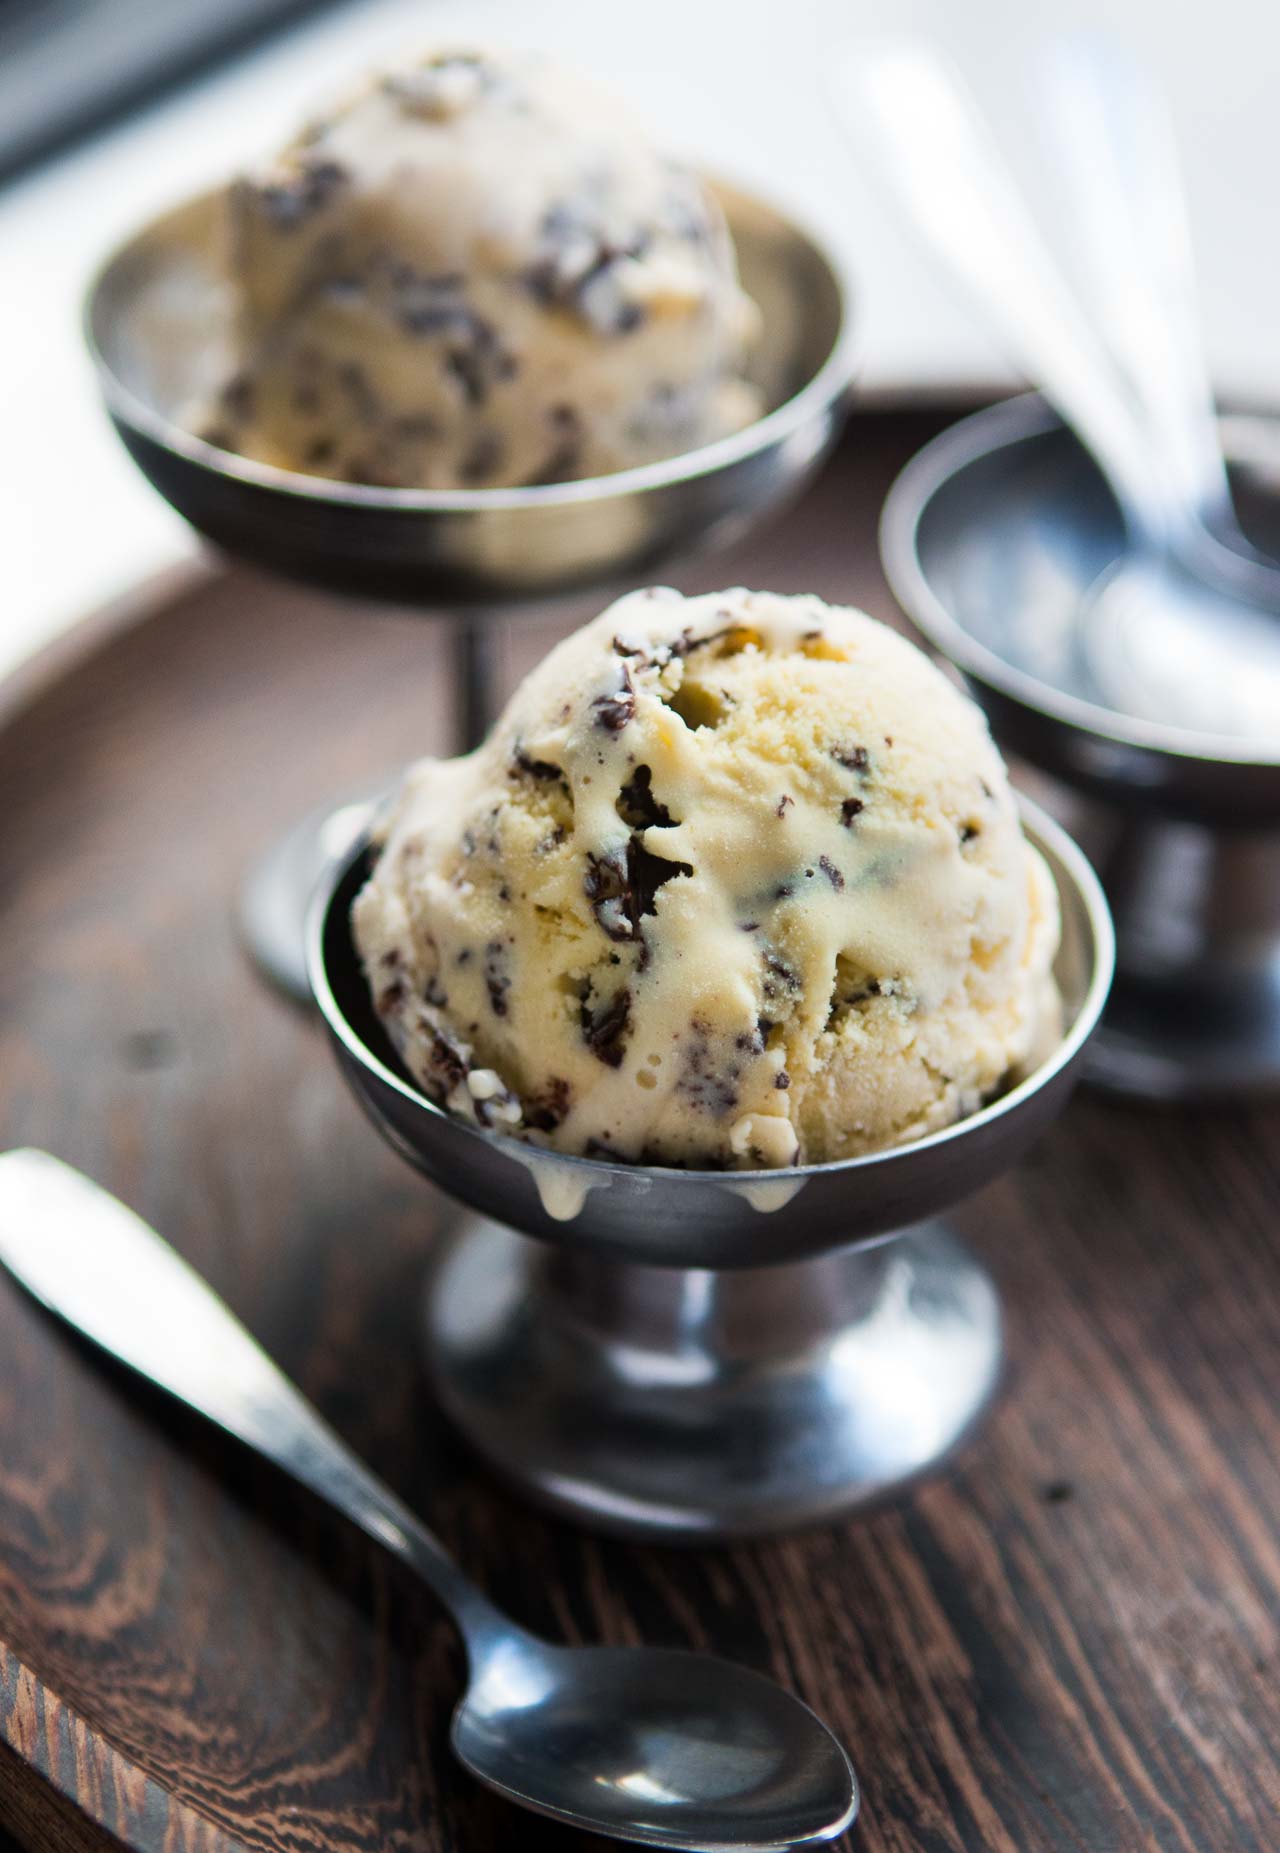 https://www.davidlebovitz.com/wp-content/uploads/2010/05/Mint-chocolate-chip-ice-cream-recipe.jpg